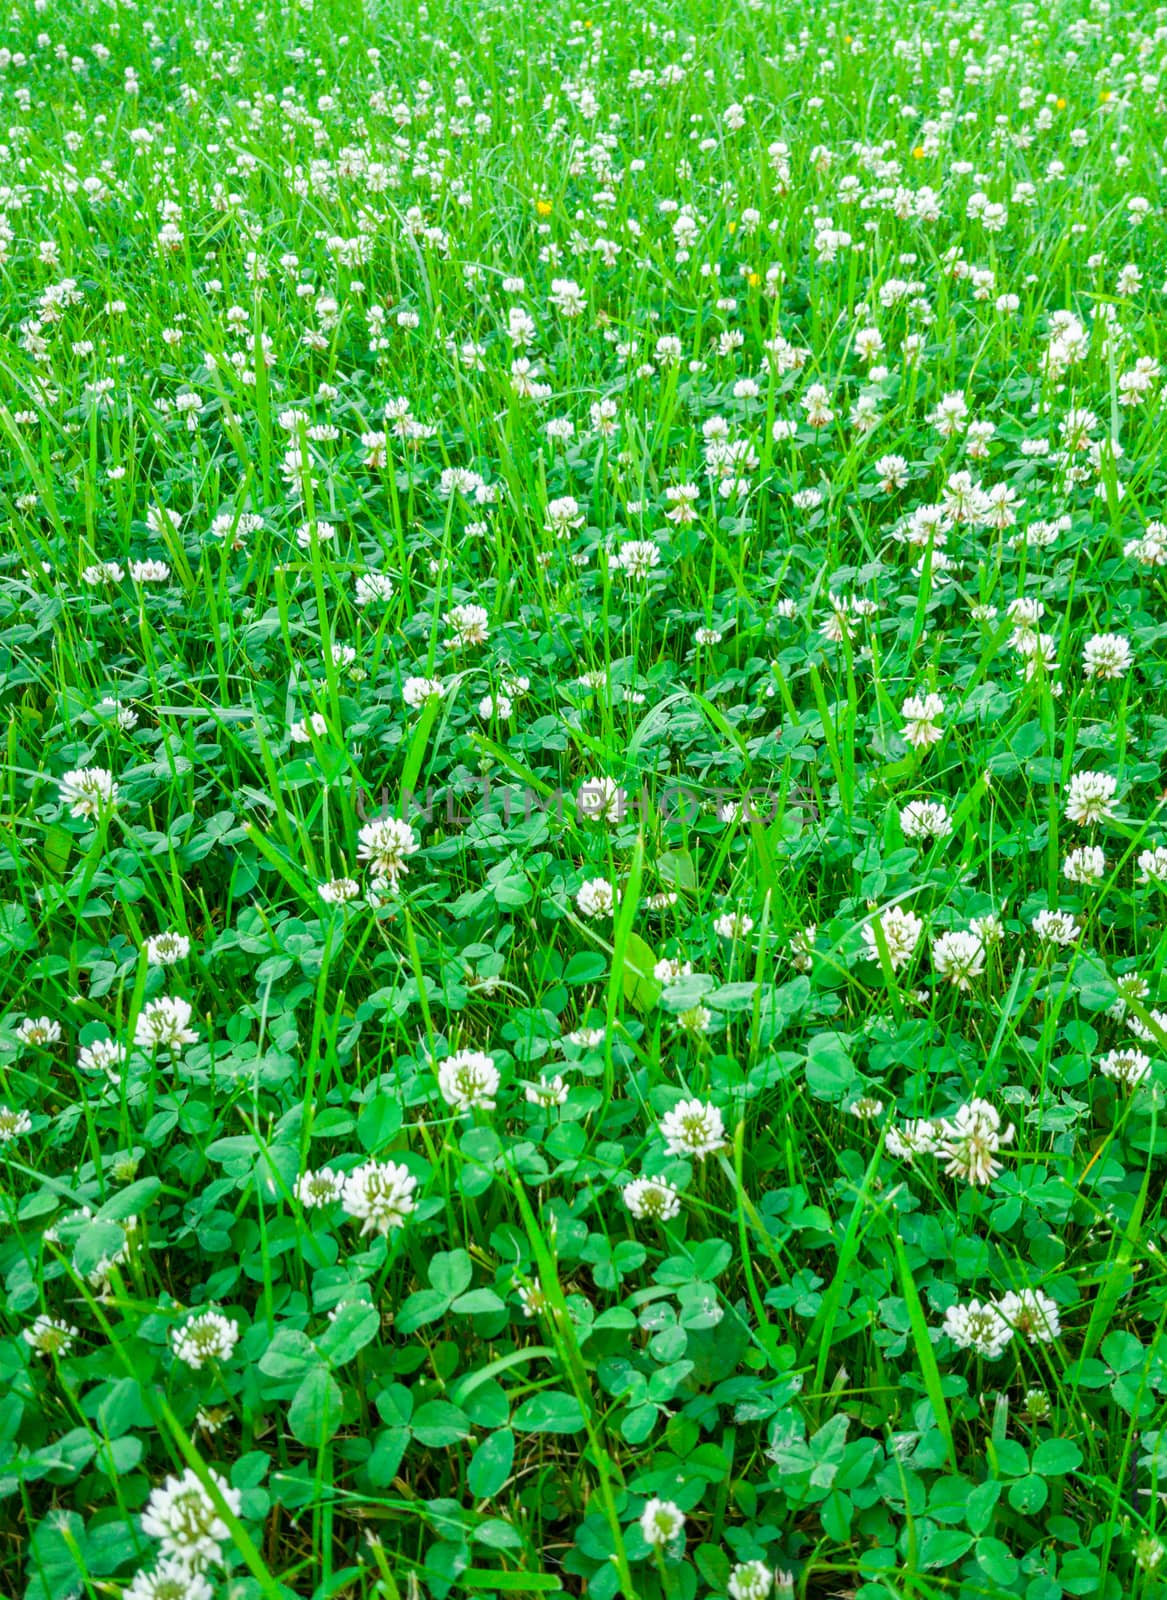 Medicinal plant, white clover field. by zeffss